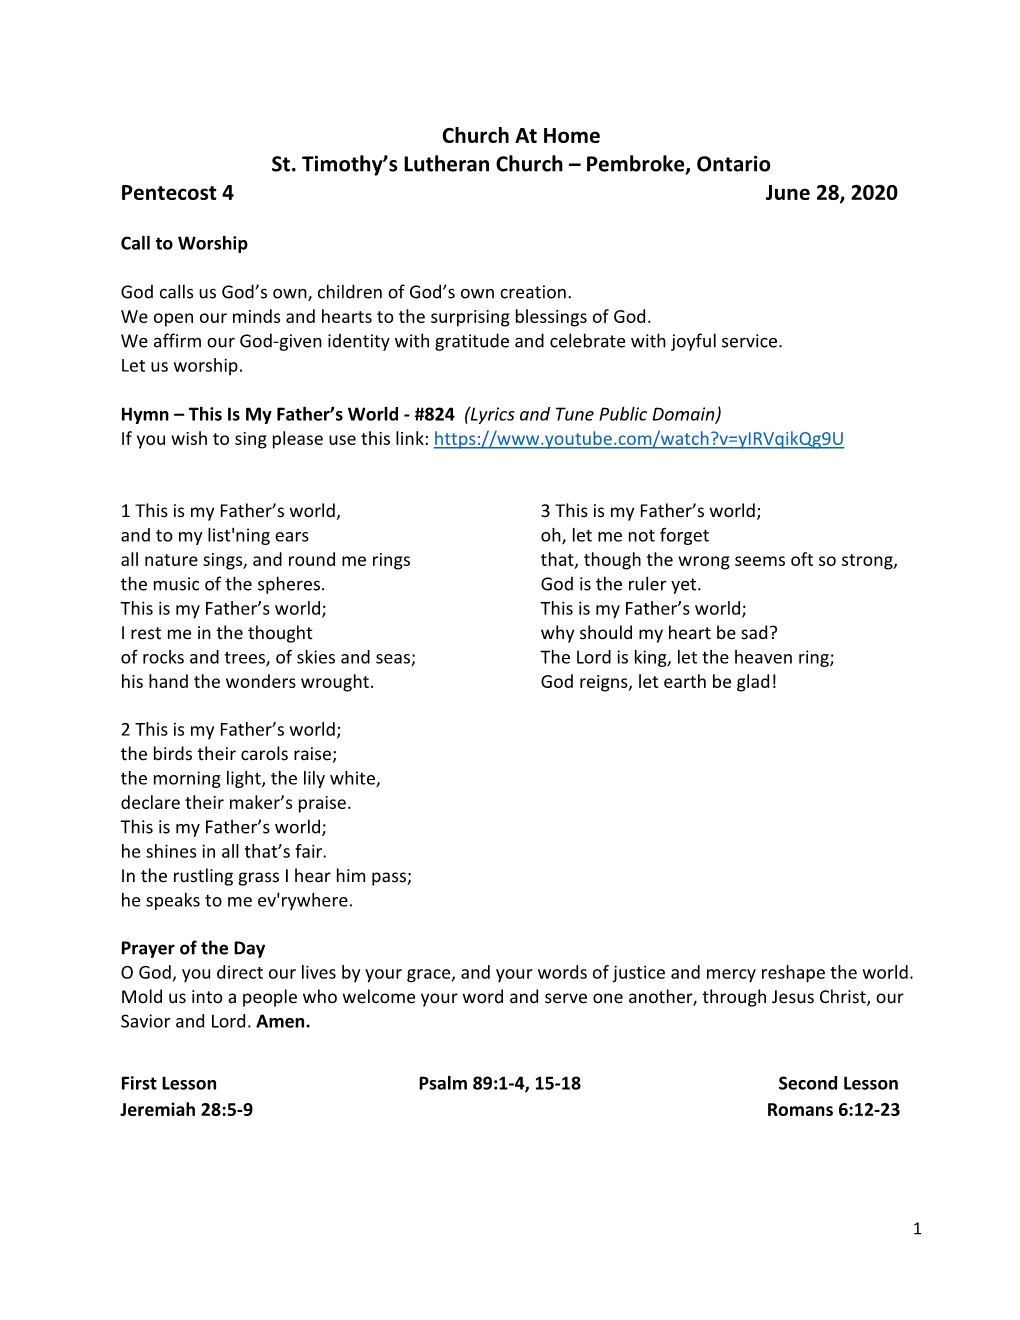 Church at Home St. Timothy's Lutheran Church – Pembroke, Ontario Pentecost 4 June 28, 2020